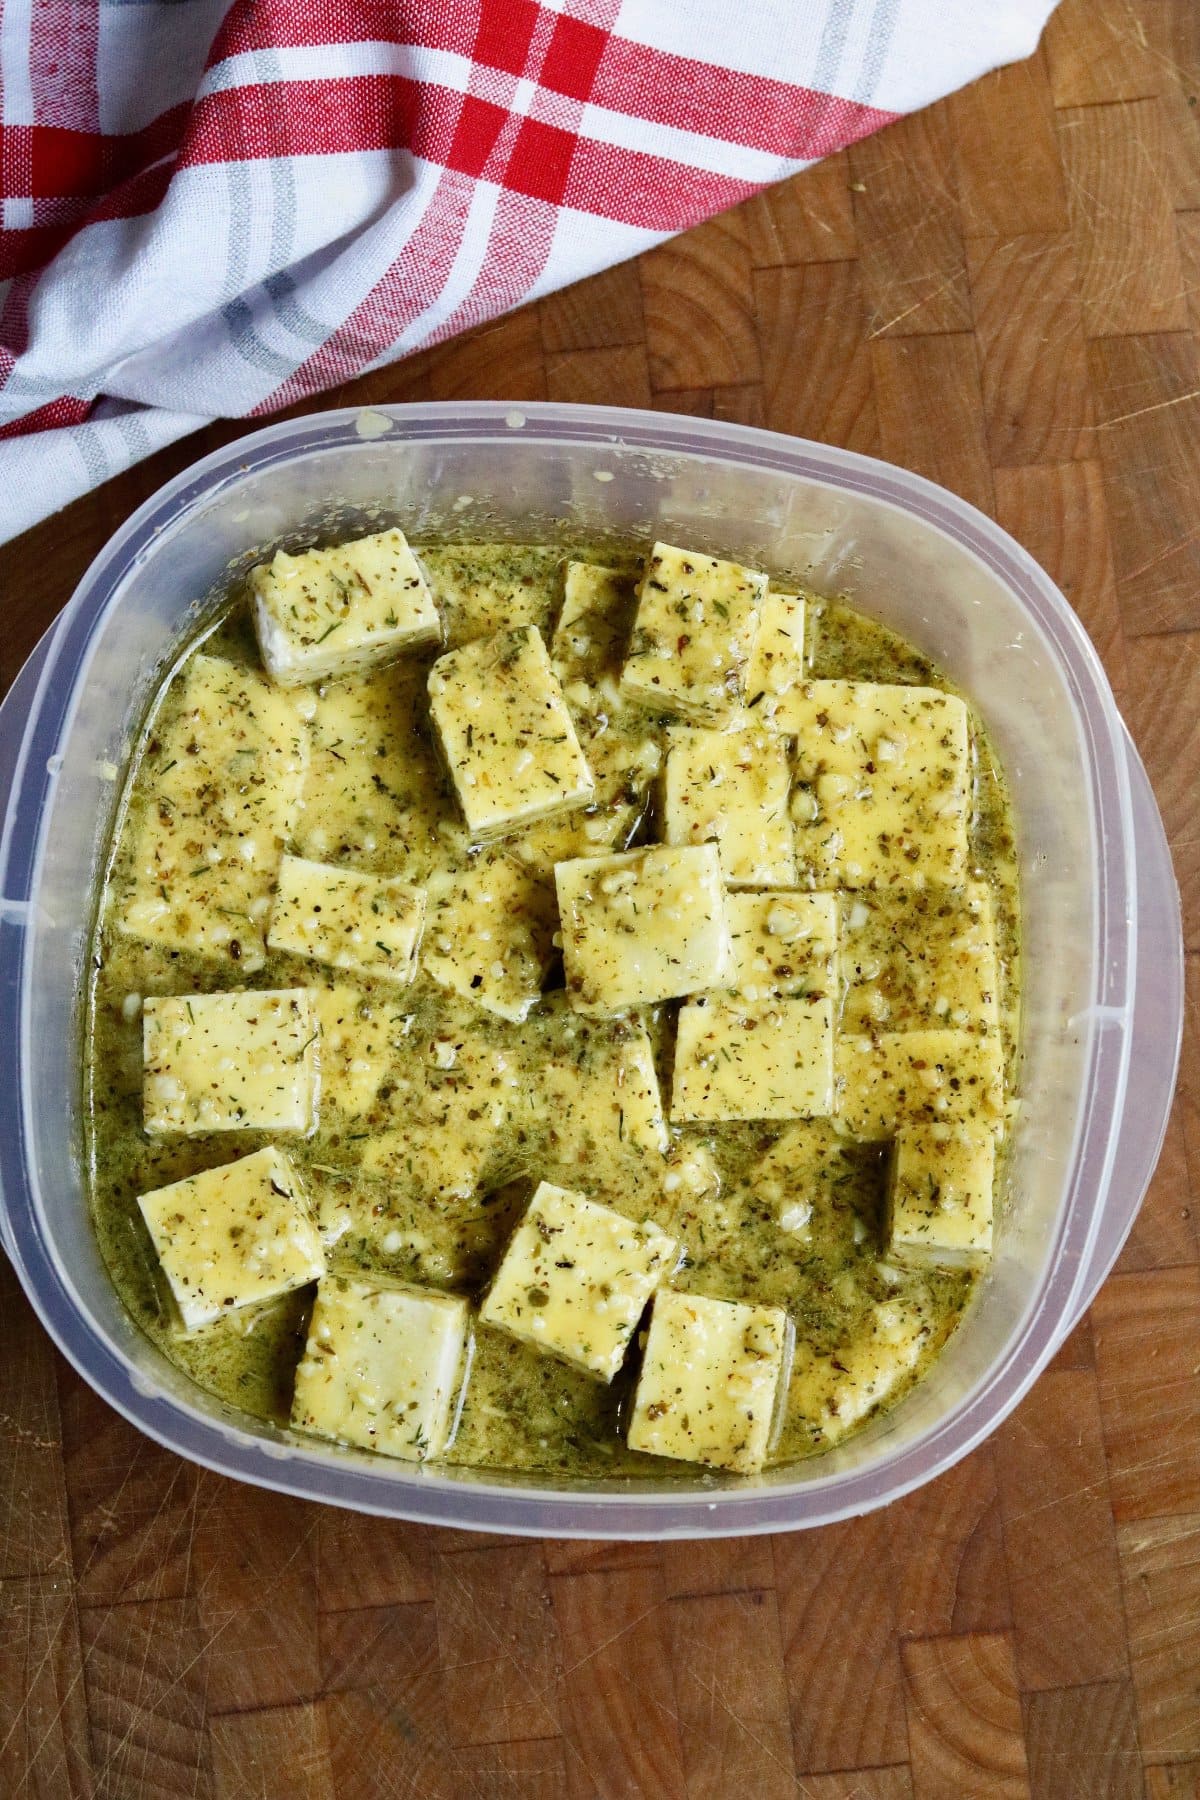 cubes of tofu marinating in brine for vegan feta cheese